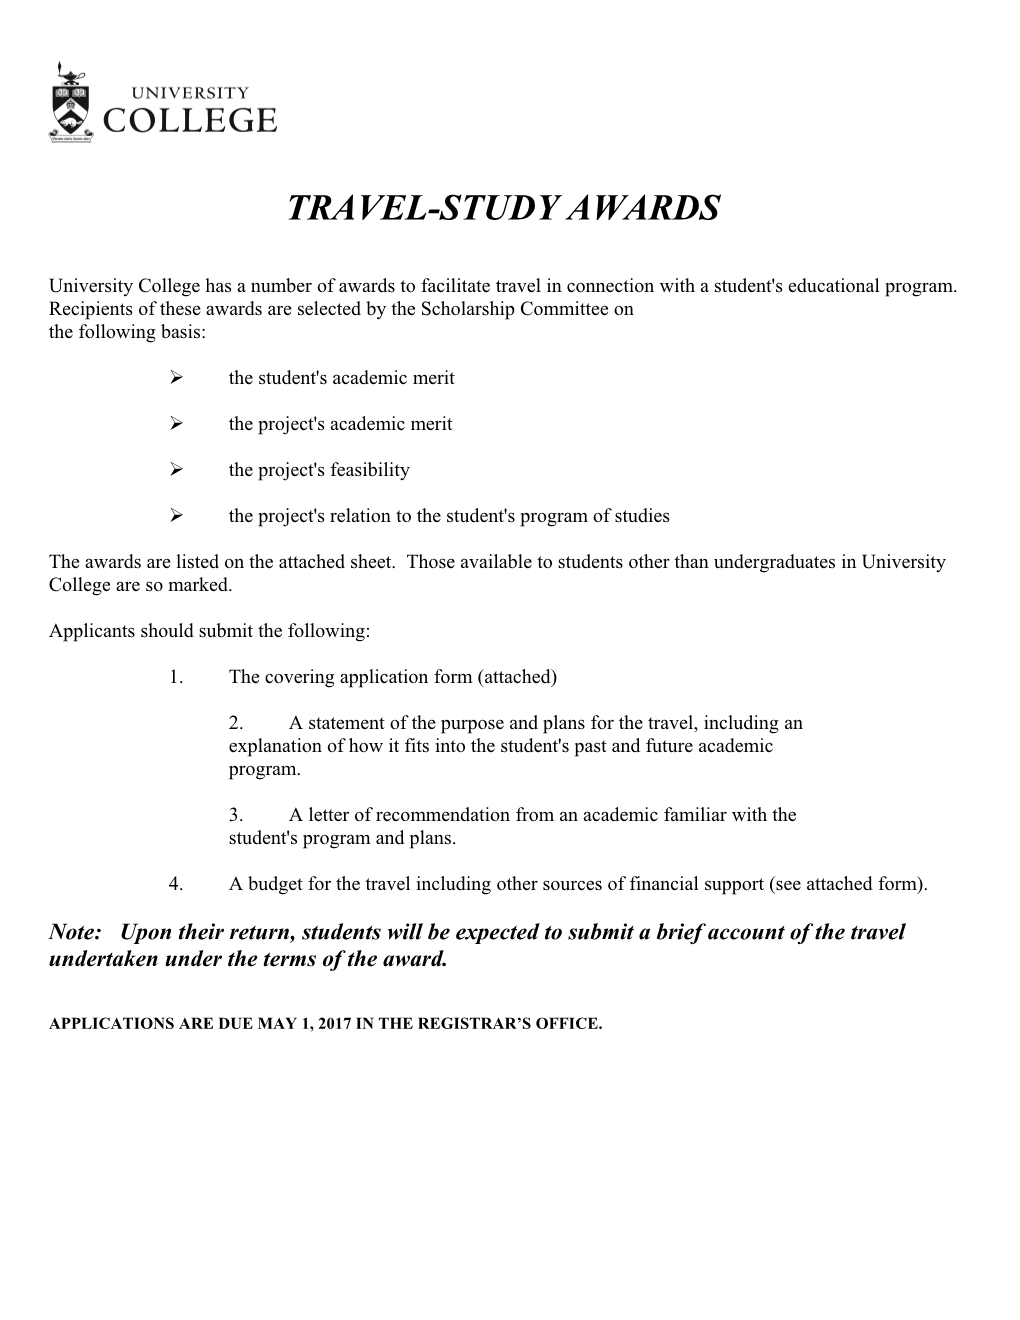 Travel-Study Awards